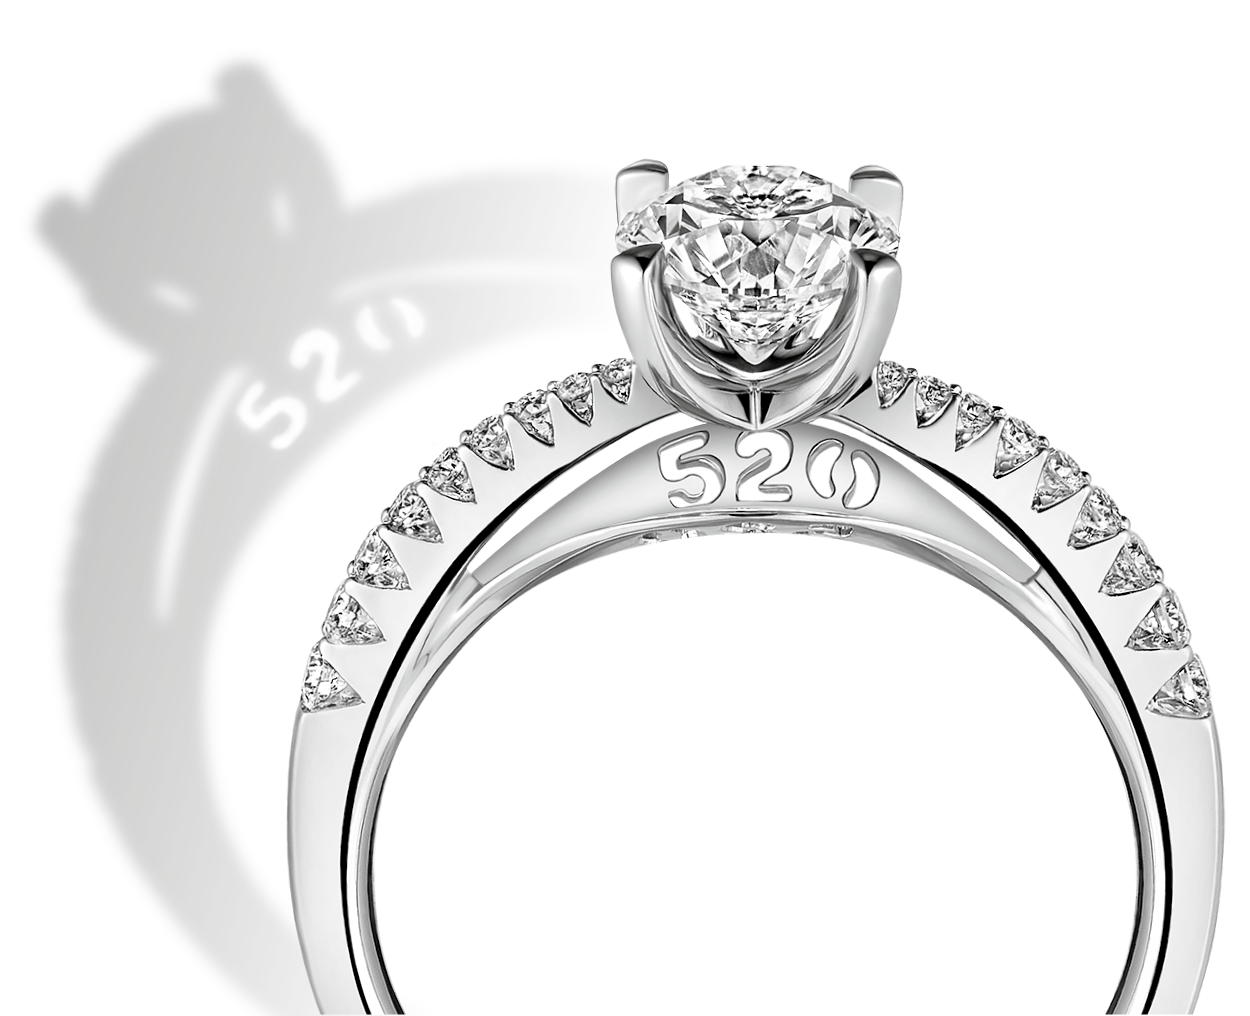 Wedding Collection "Light of Love" 18K White Gold Diamond Ring